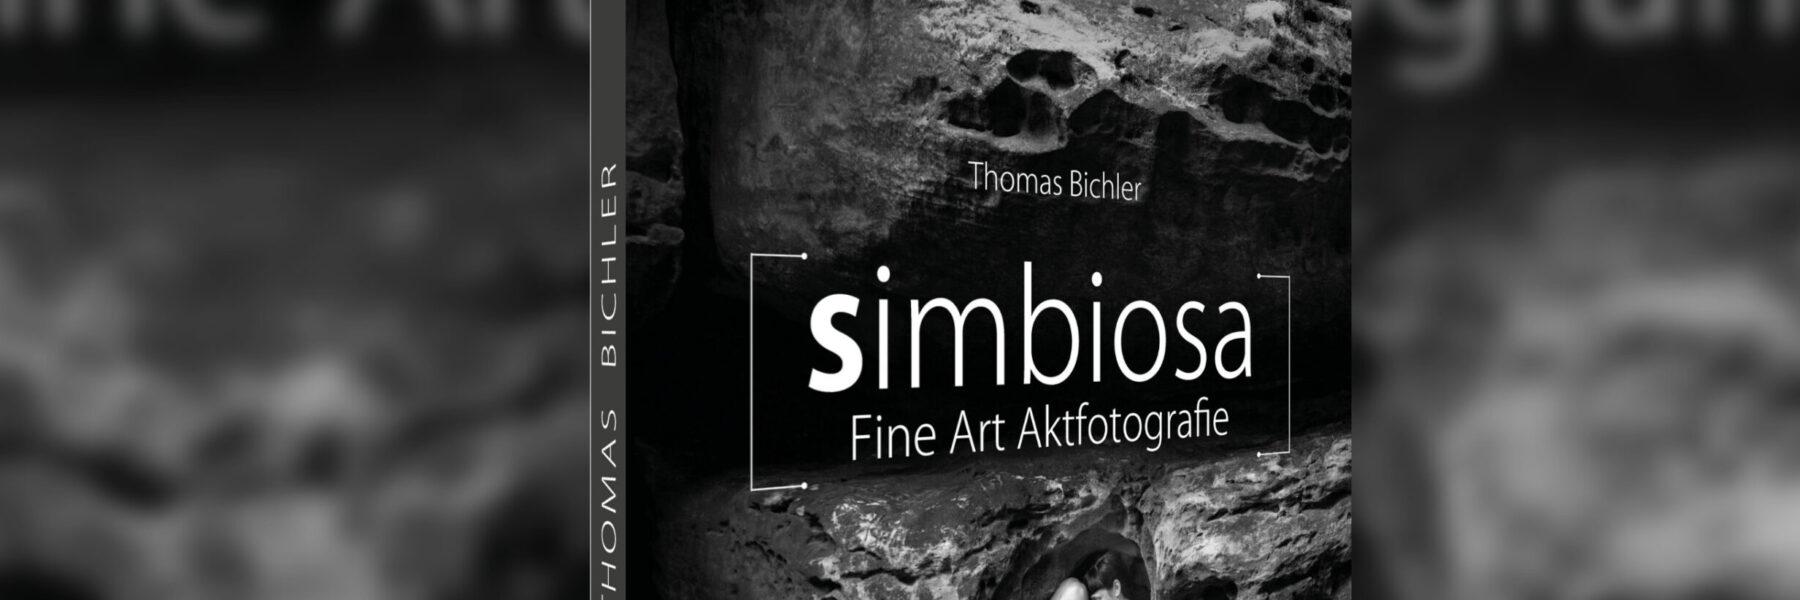 simbiosa – Thomas Bichler